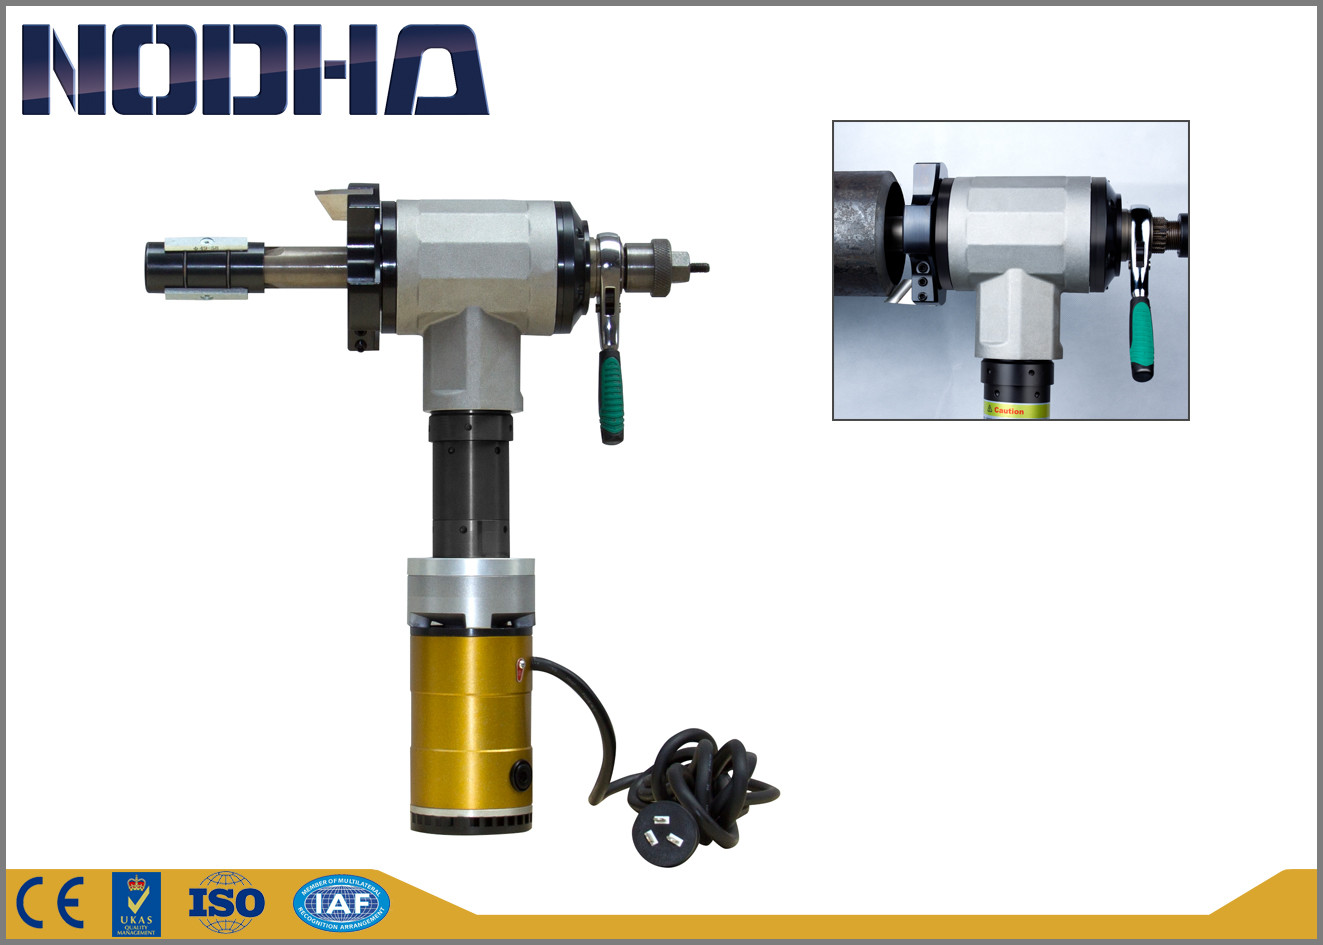 Portable ID - Mounted Electric Pipe Beveling Machine NODHA Brand 1200W